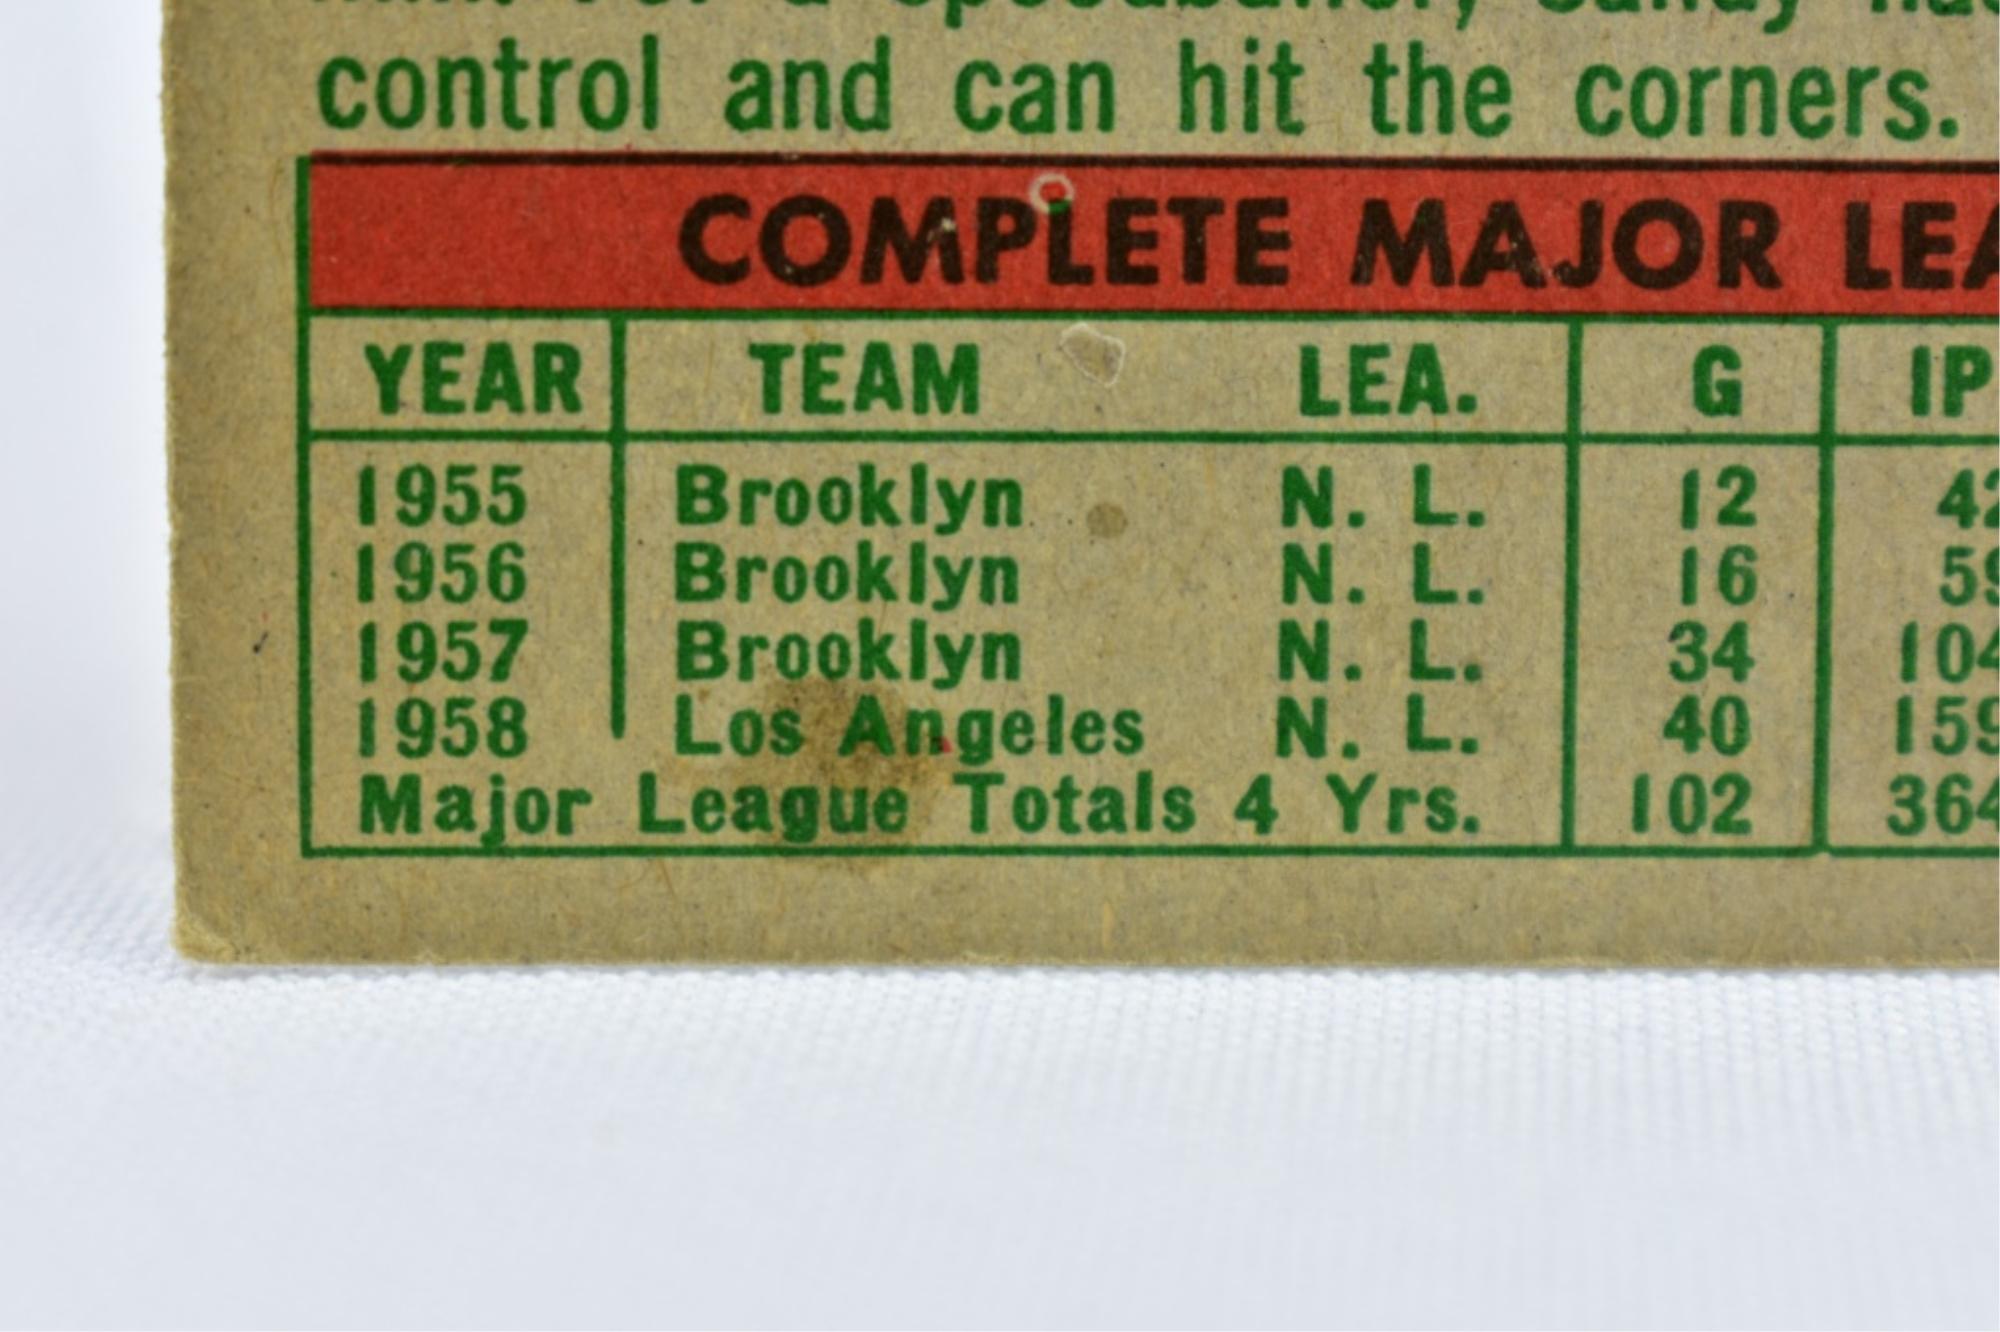 1959 Sandy Koufax - Los Angeles Dodgers - Topps #163